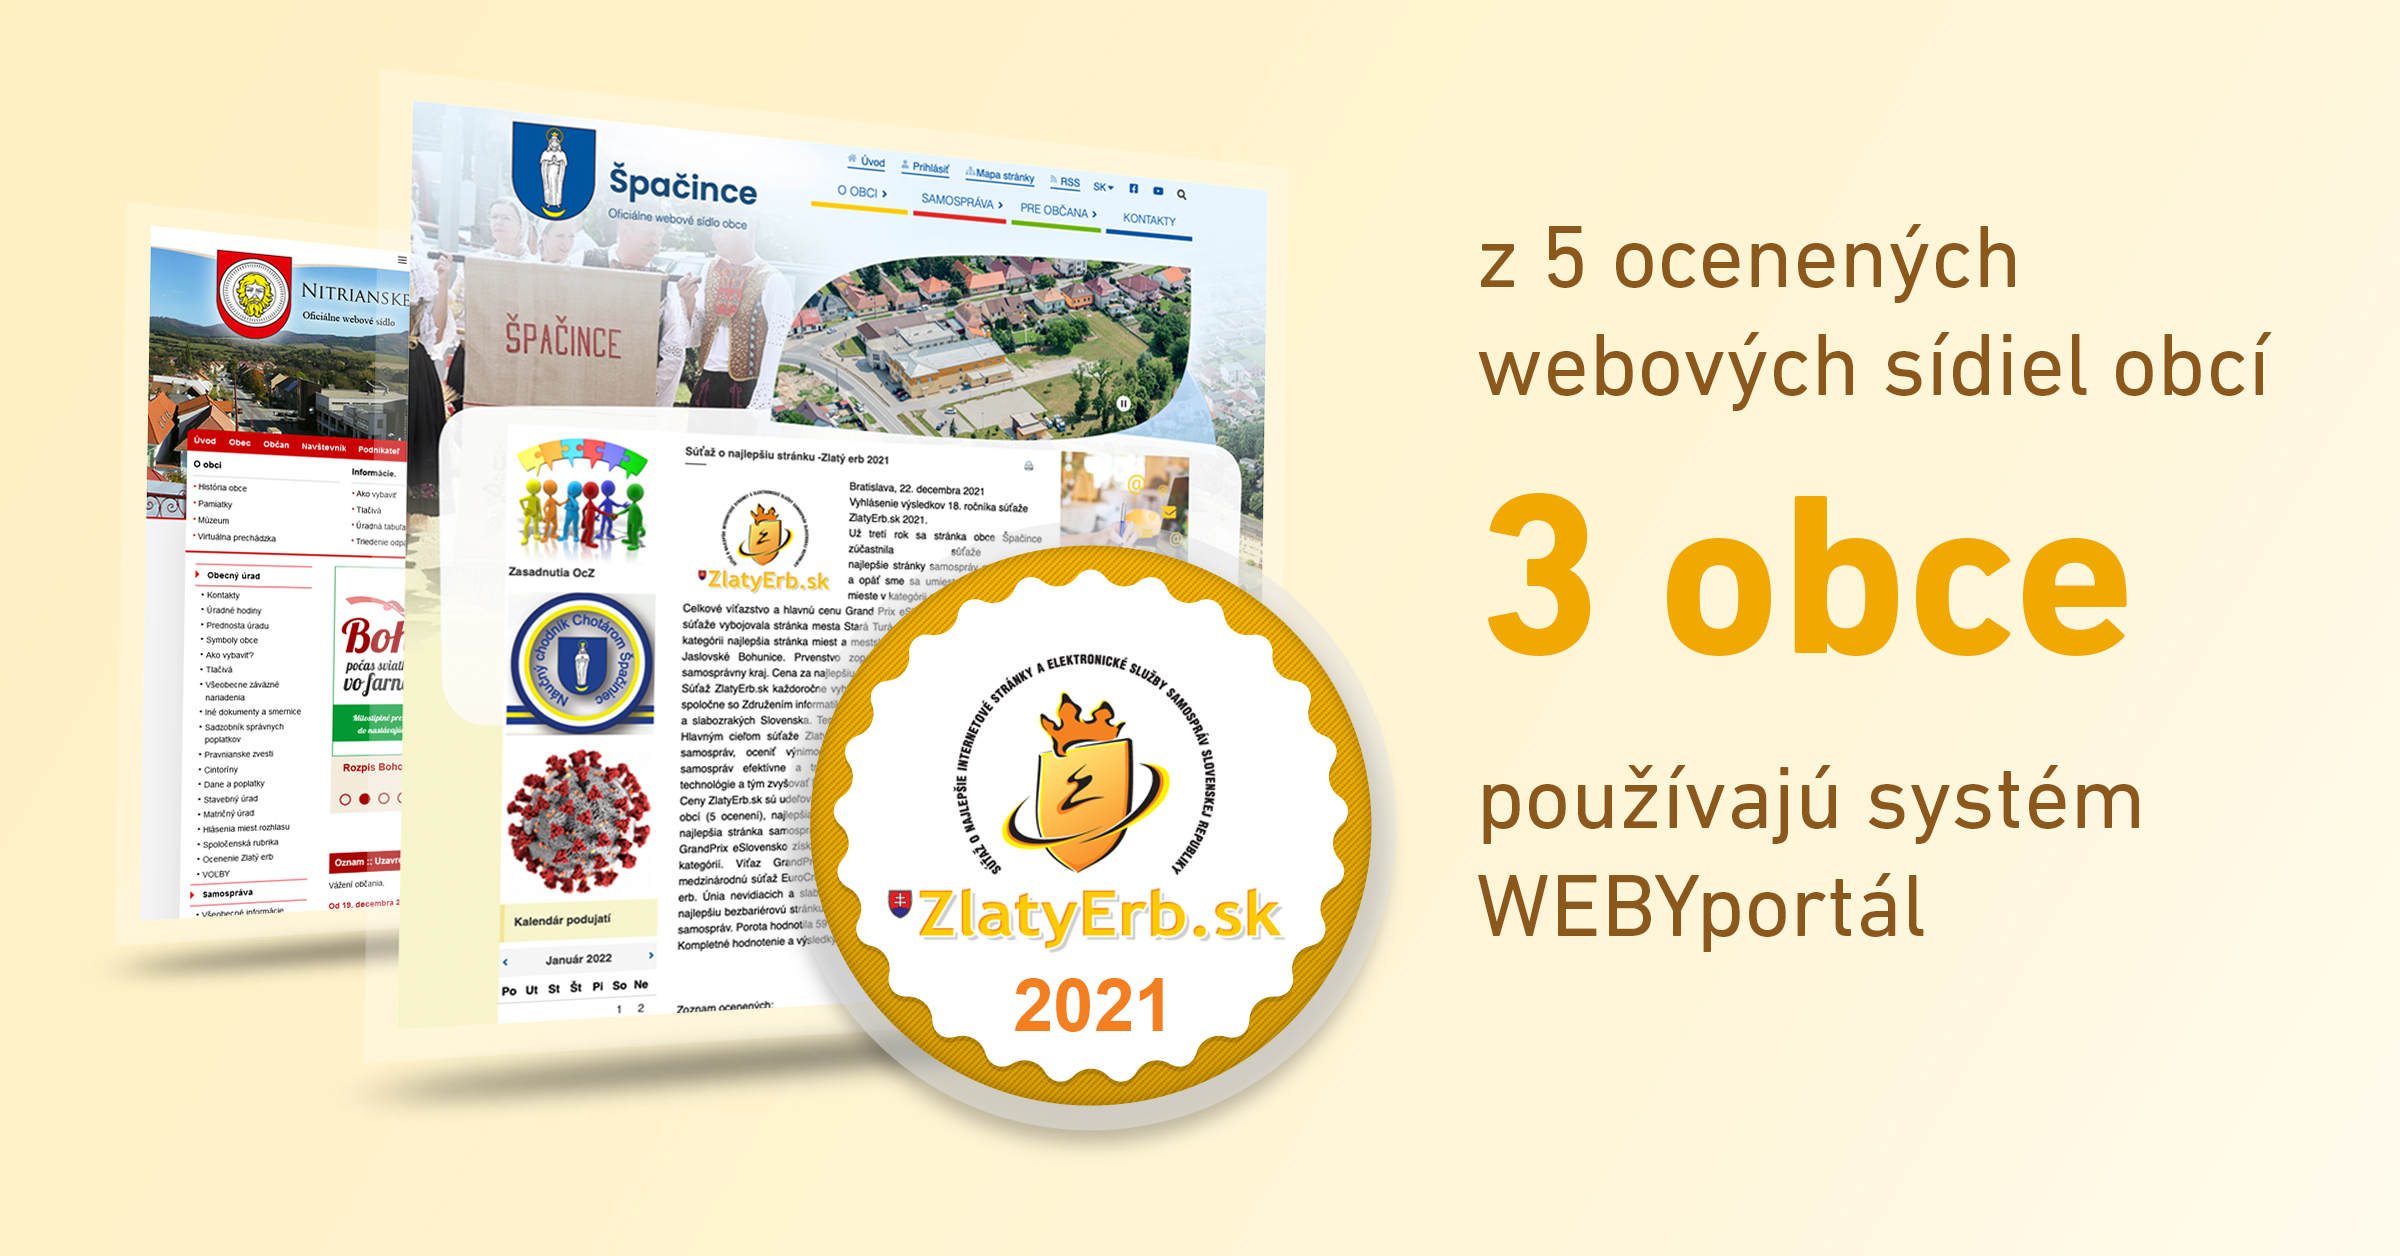 weby-group-zlaty-erb-2021